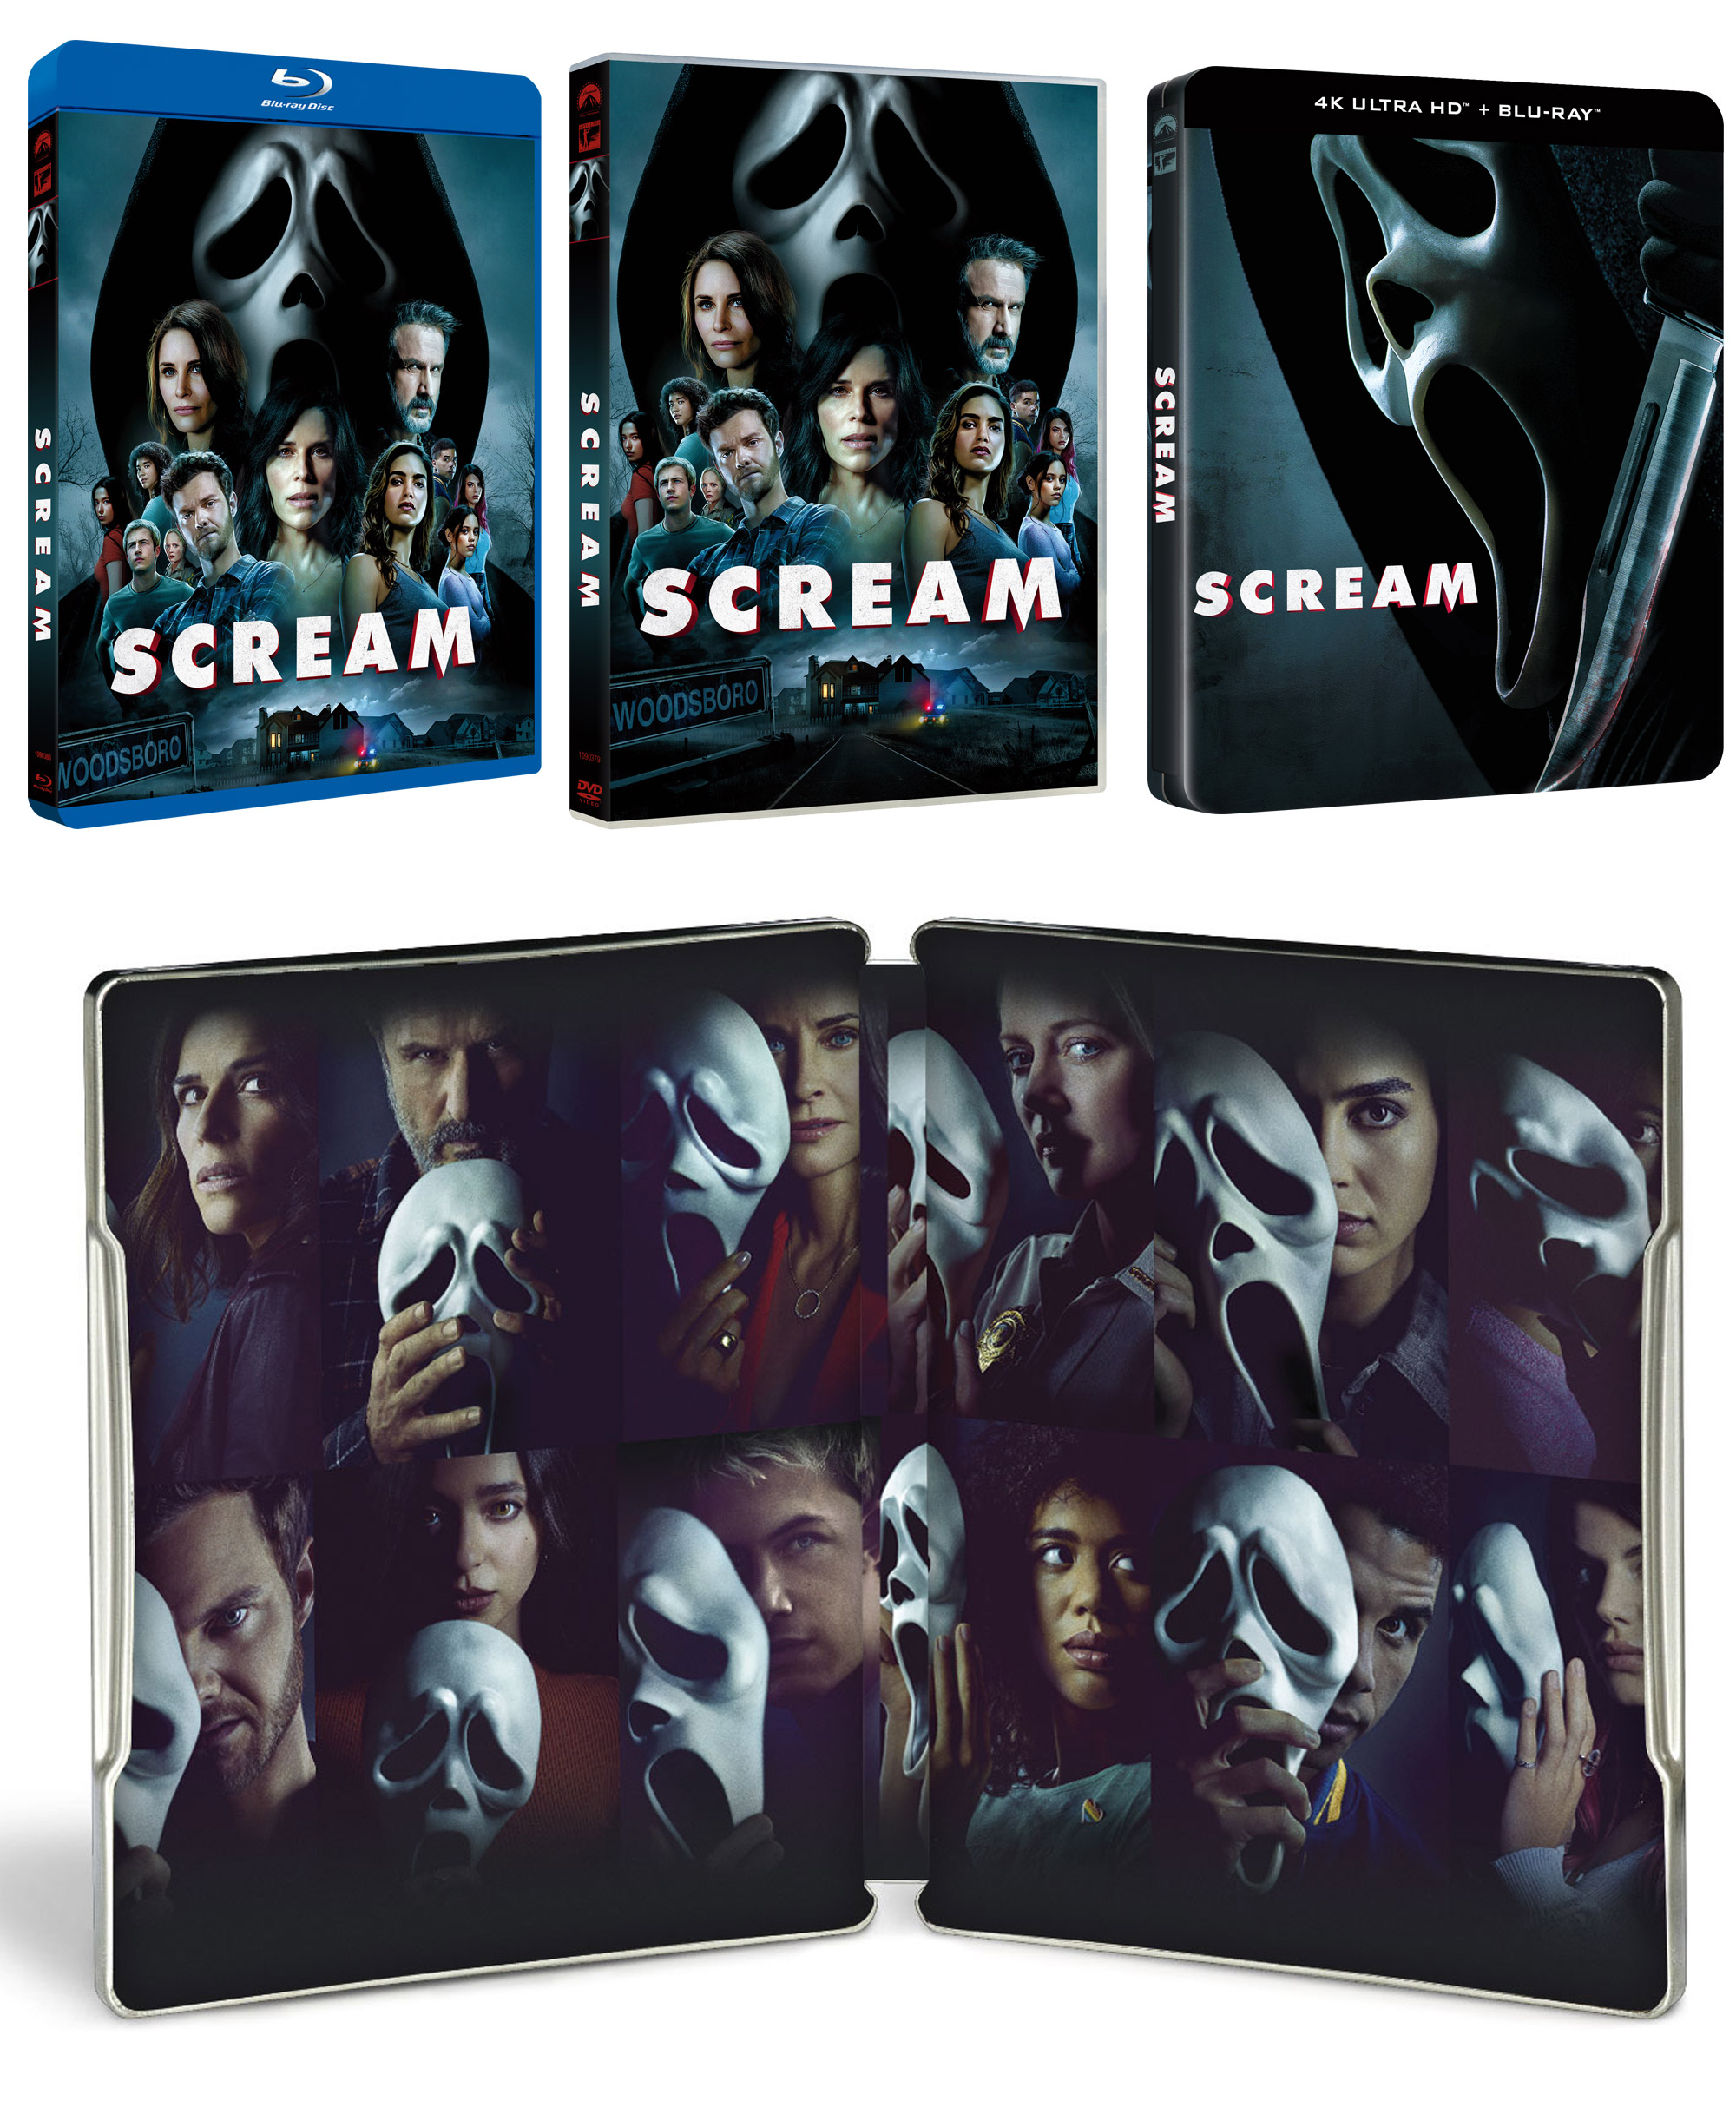 SCREAM in DVD, Blu-ray e Steelbook UHD con Blu-ray